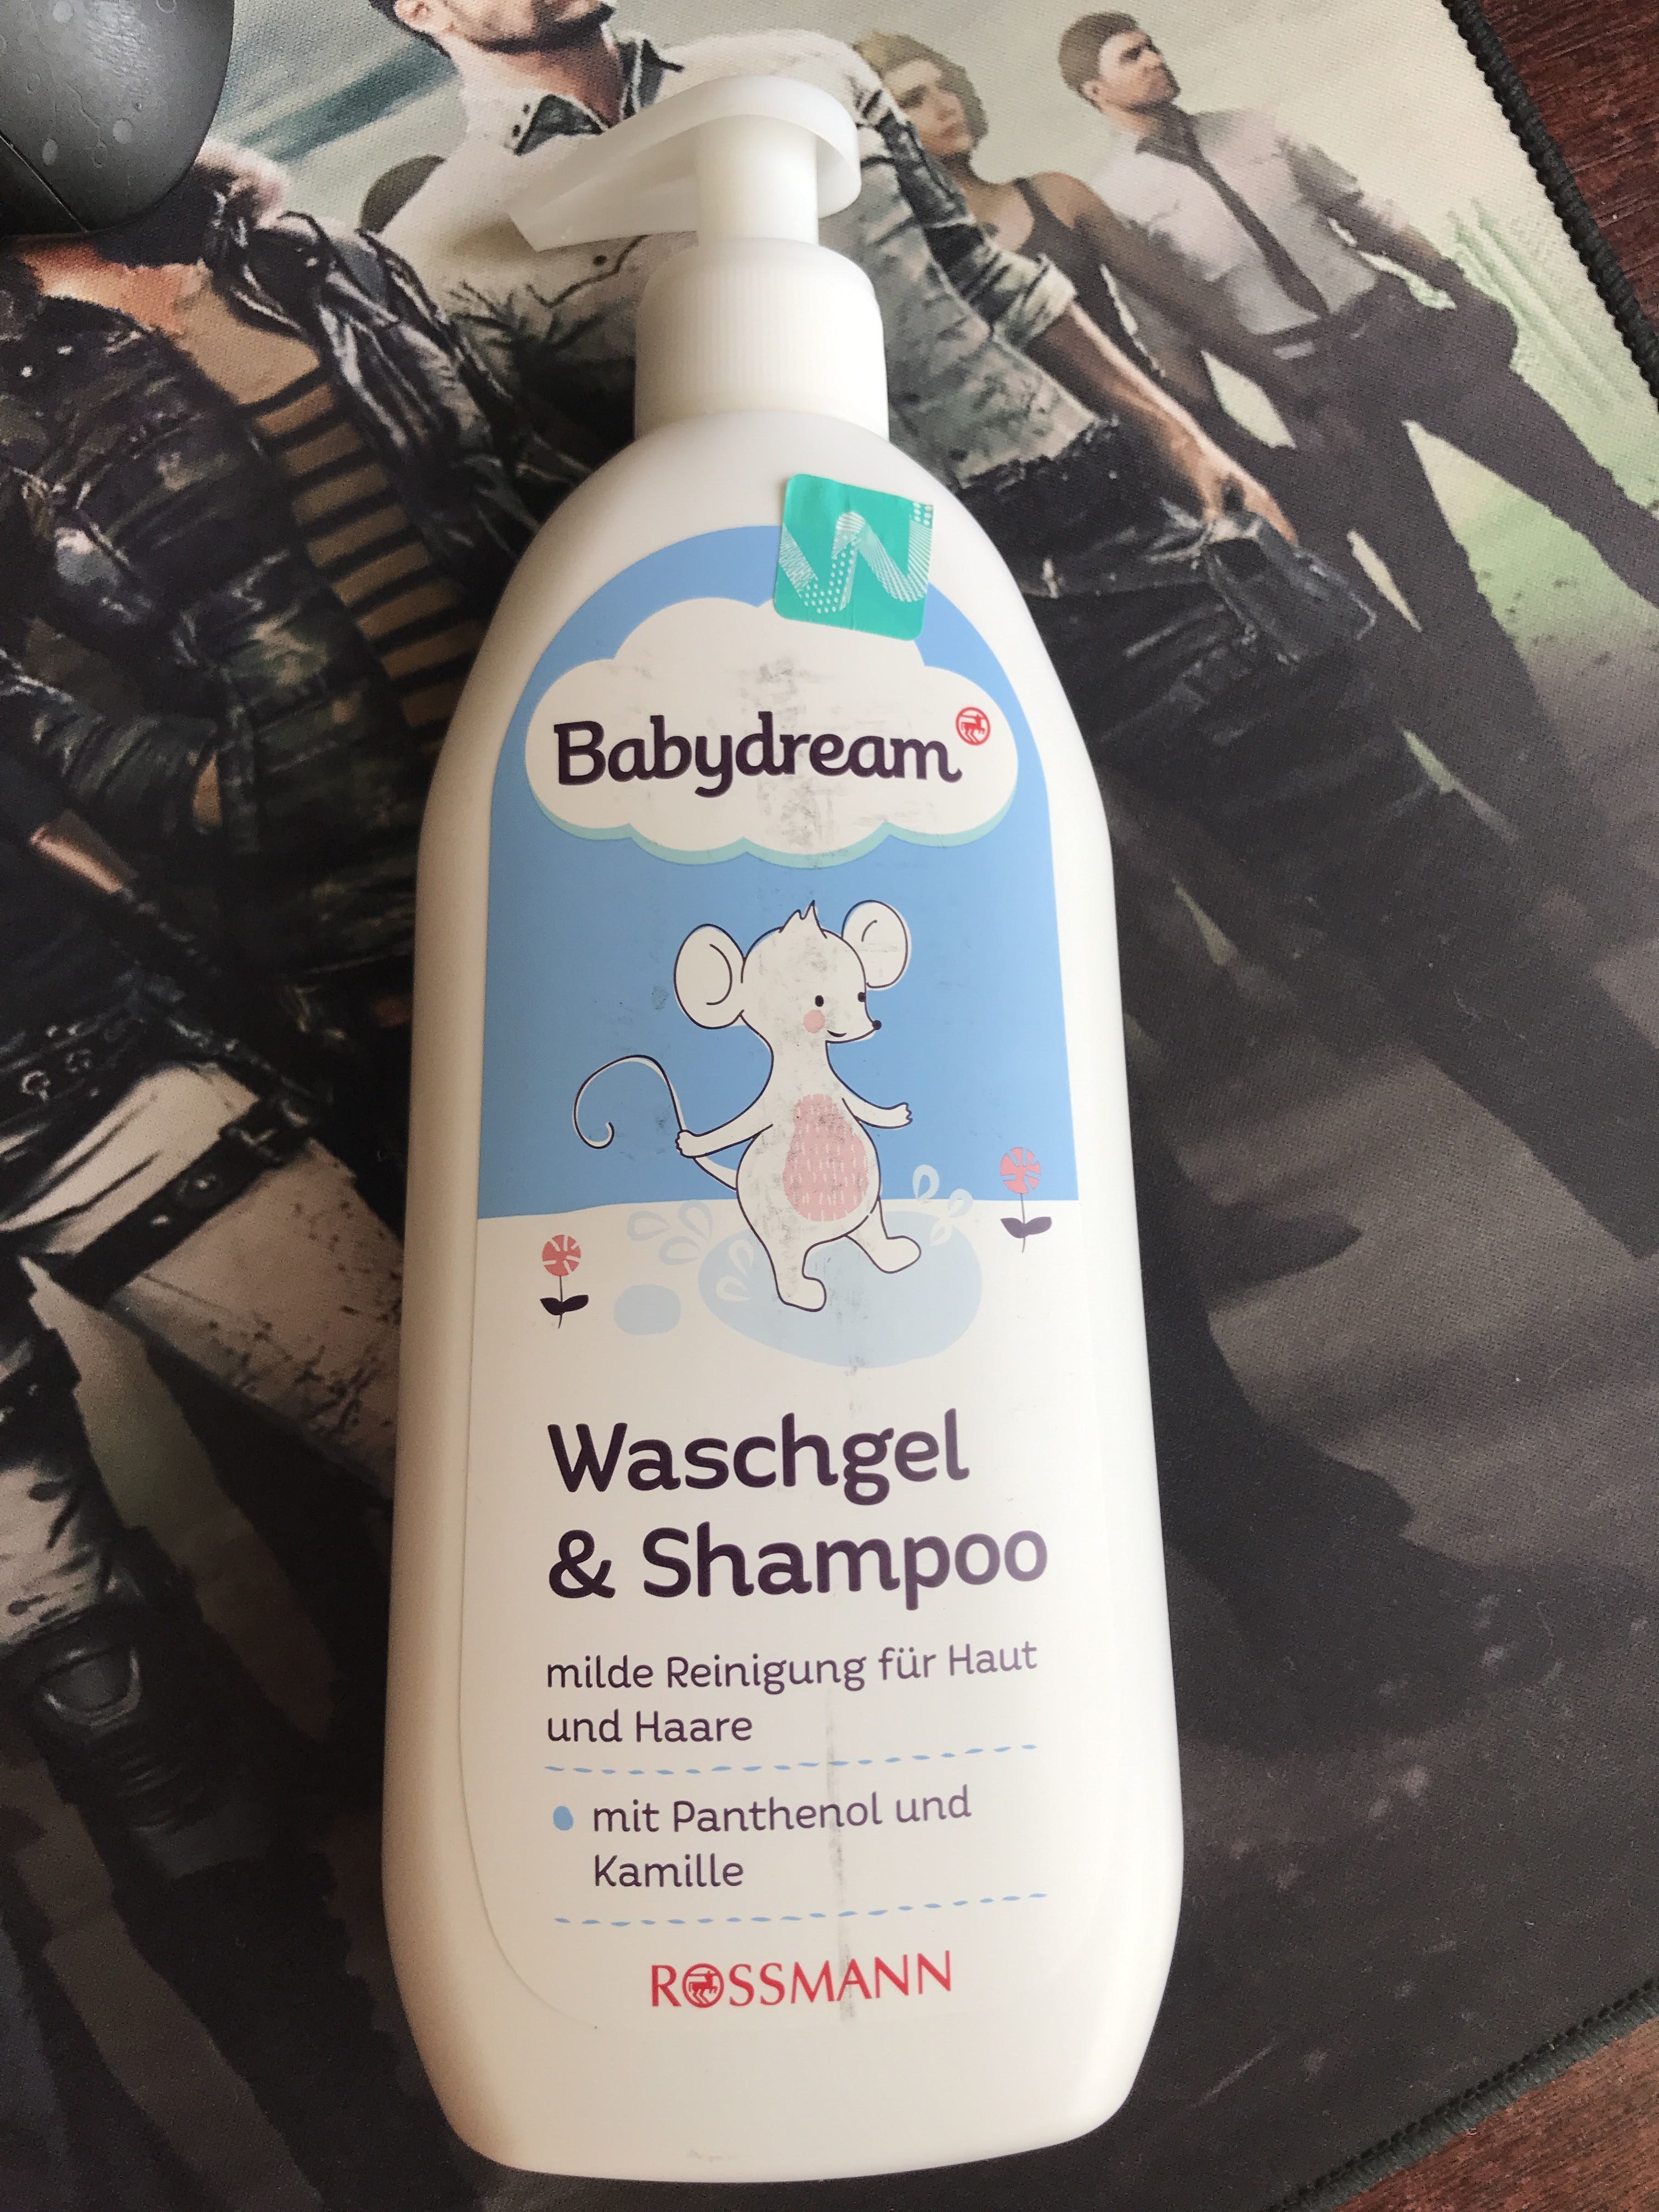 Washgel and shampoo - 製品 - ru